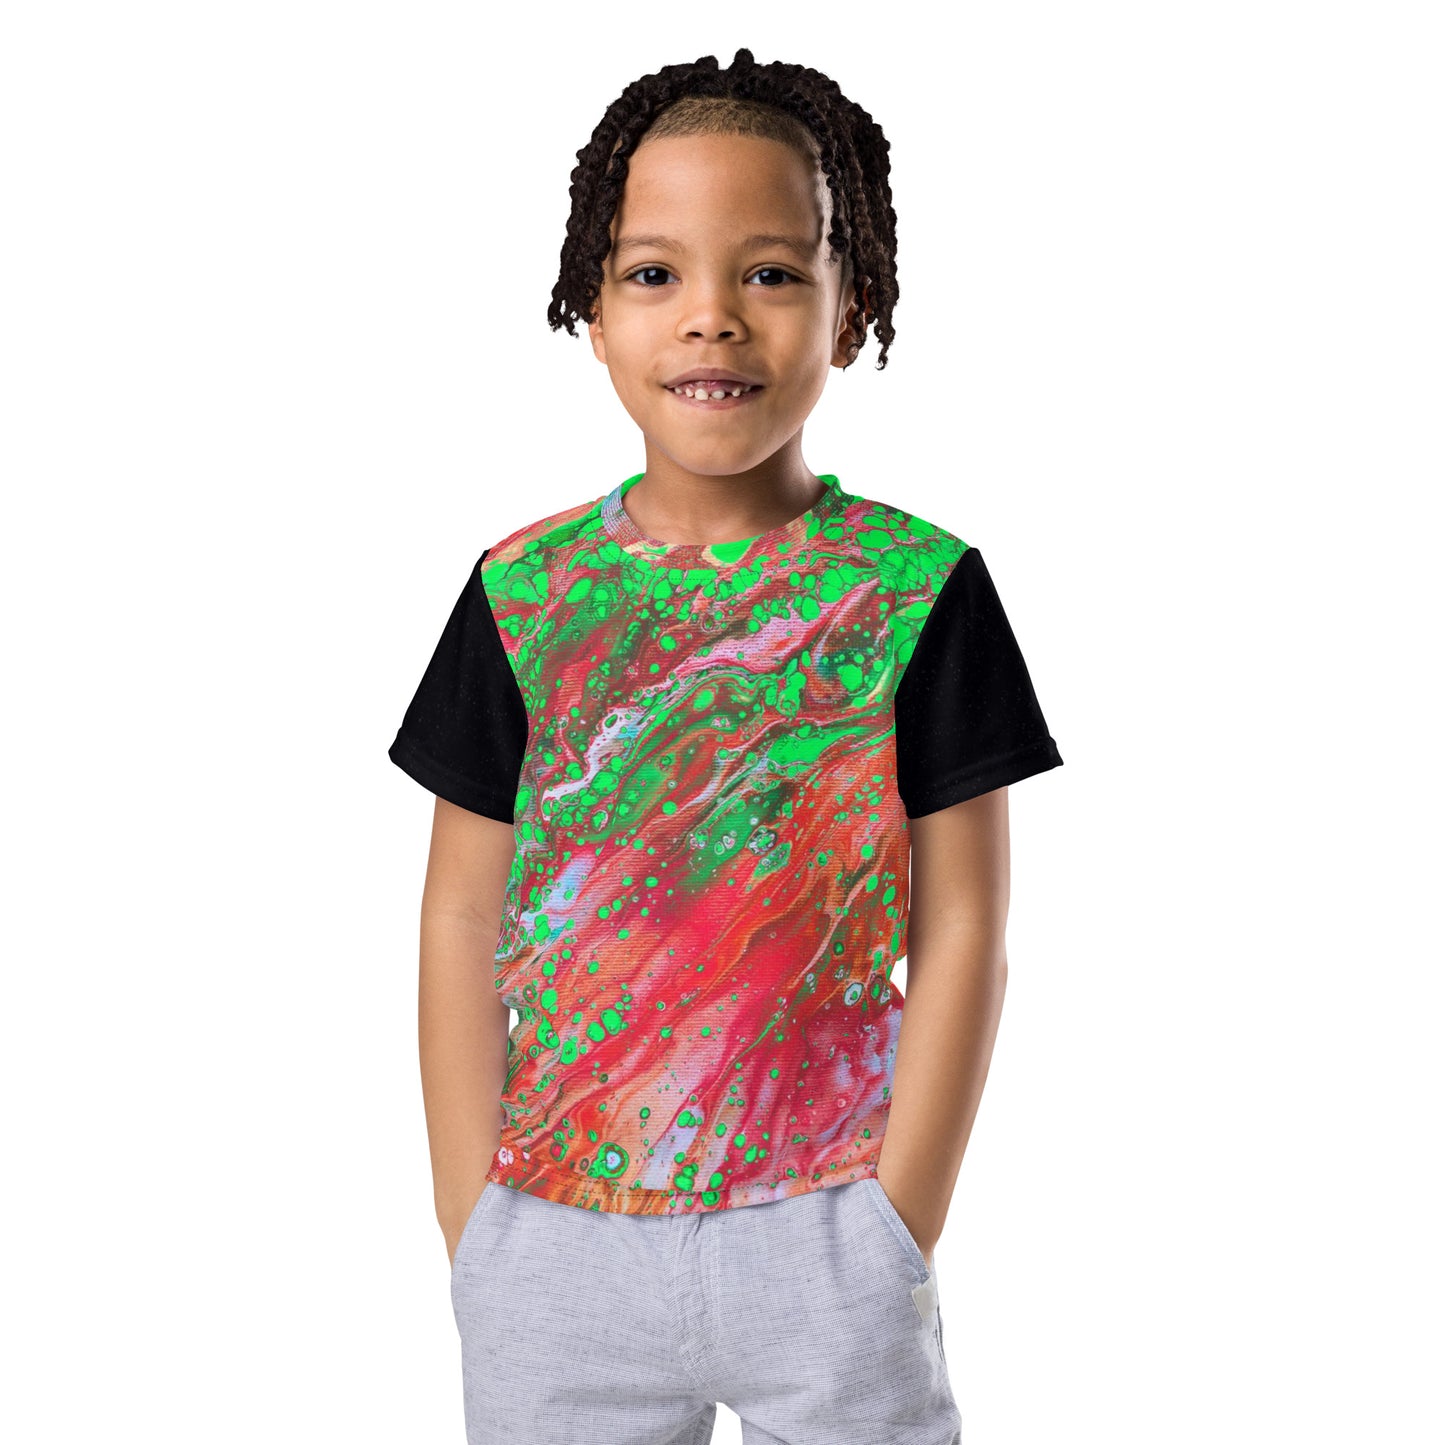 Bright Cells Kids crew neck t-shirt